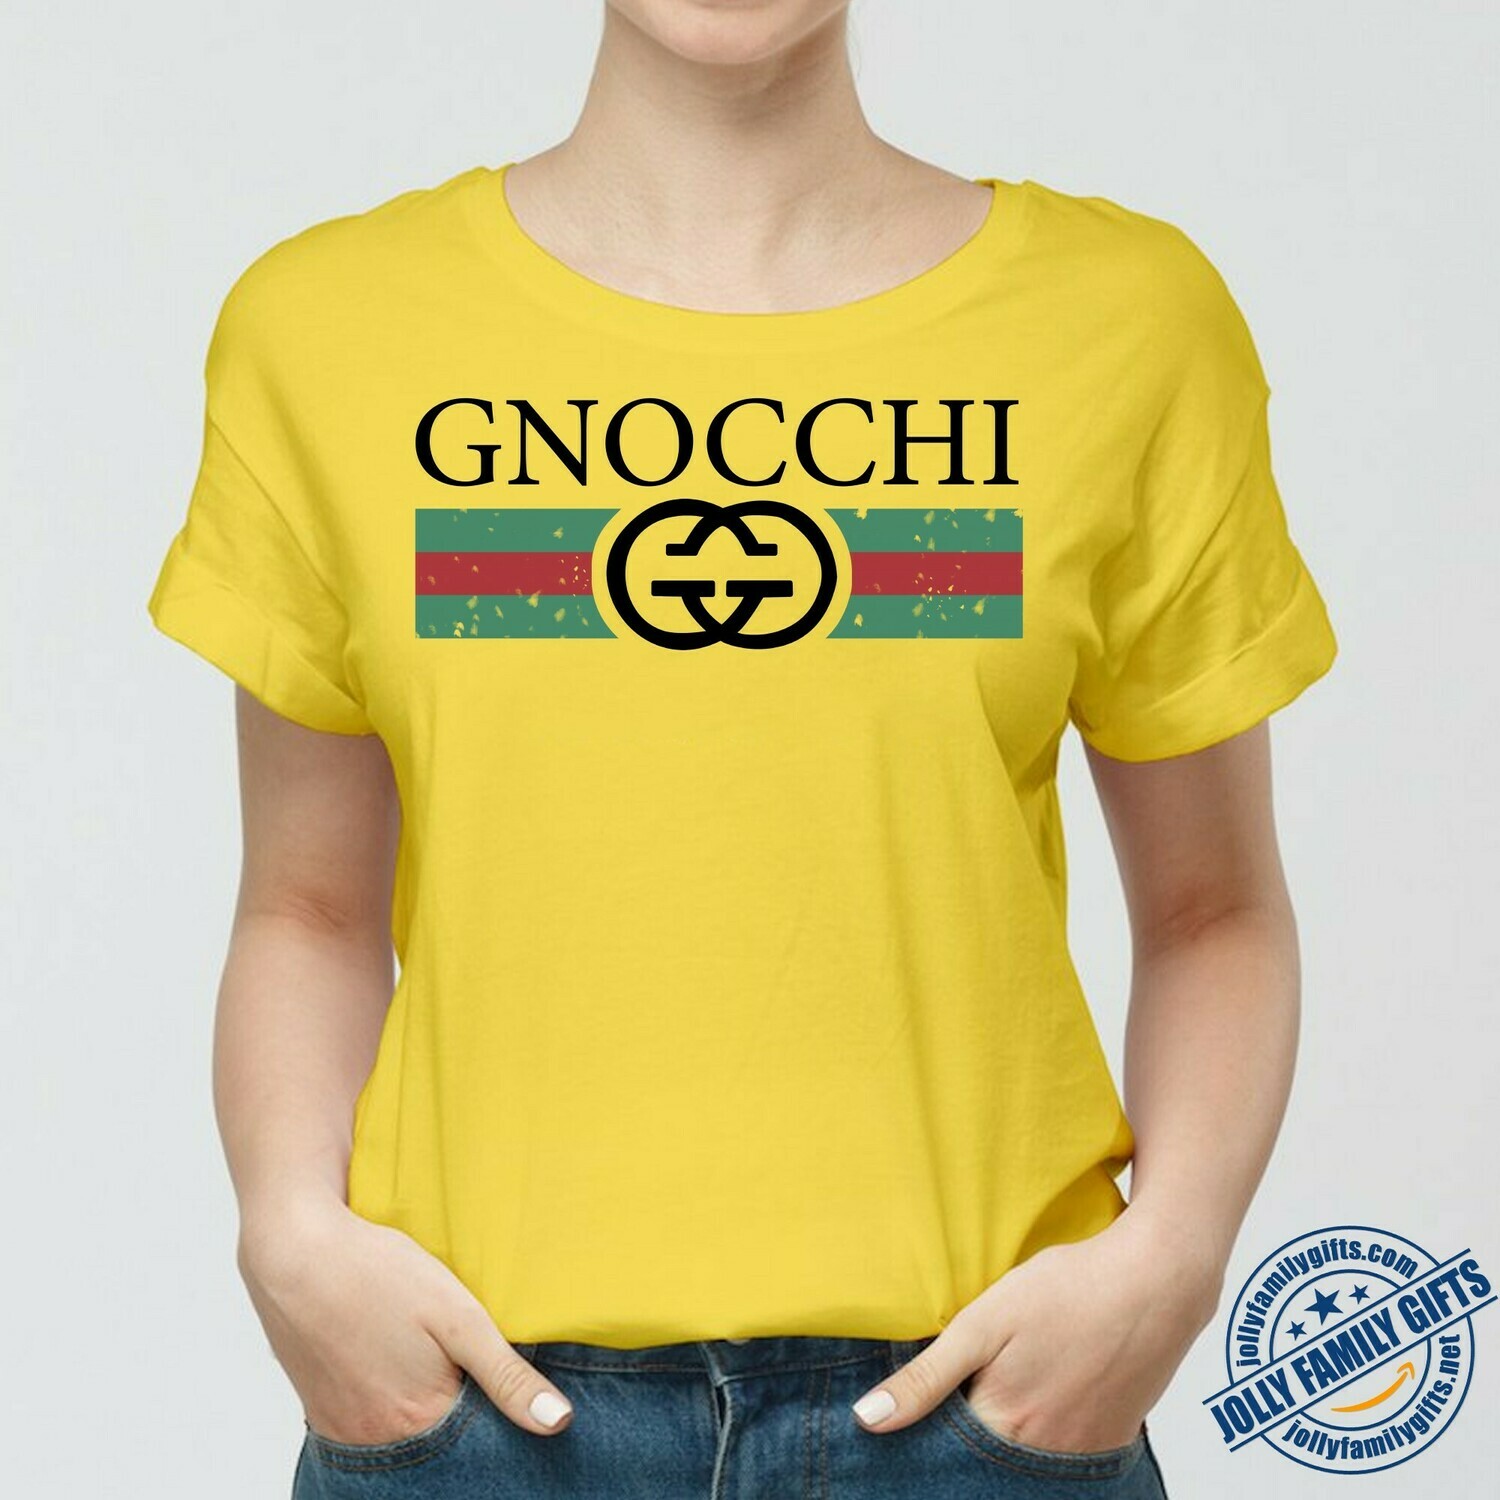 gnocchi gucci shirt